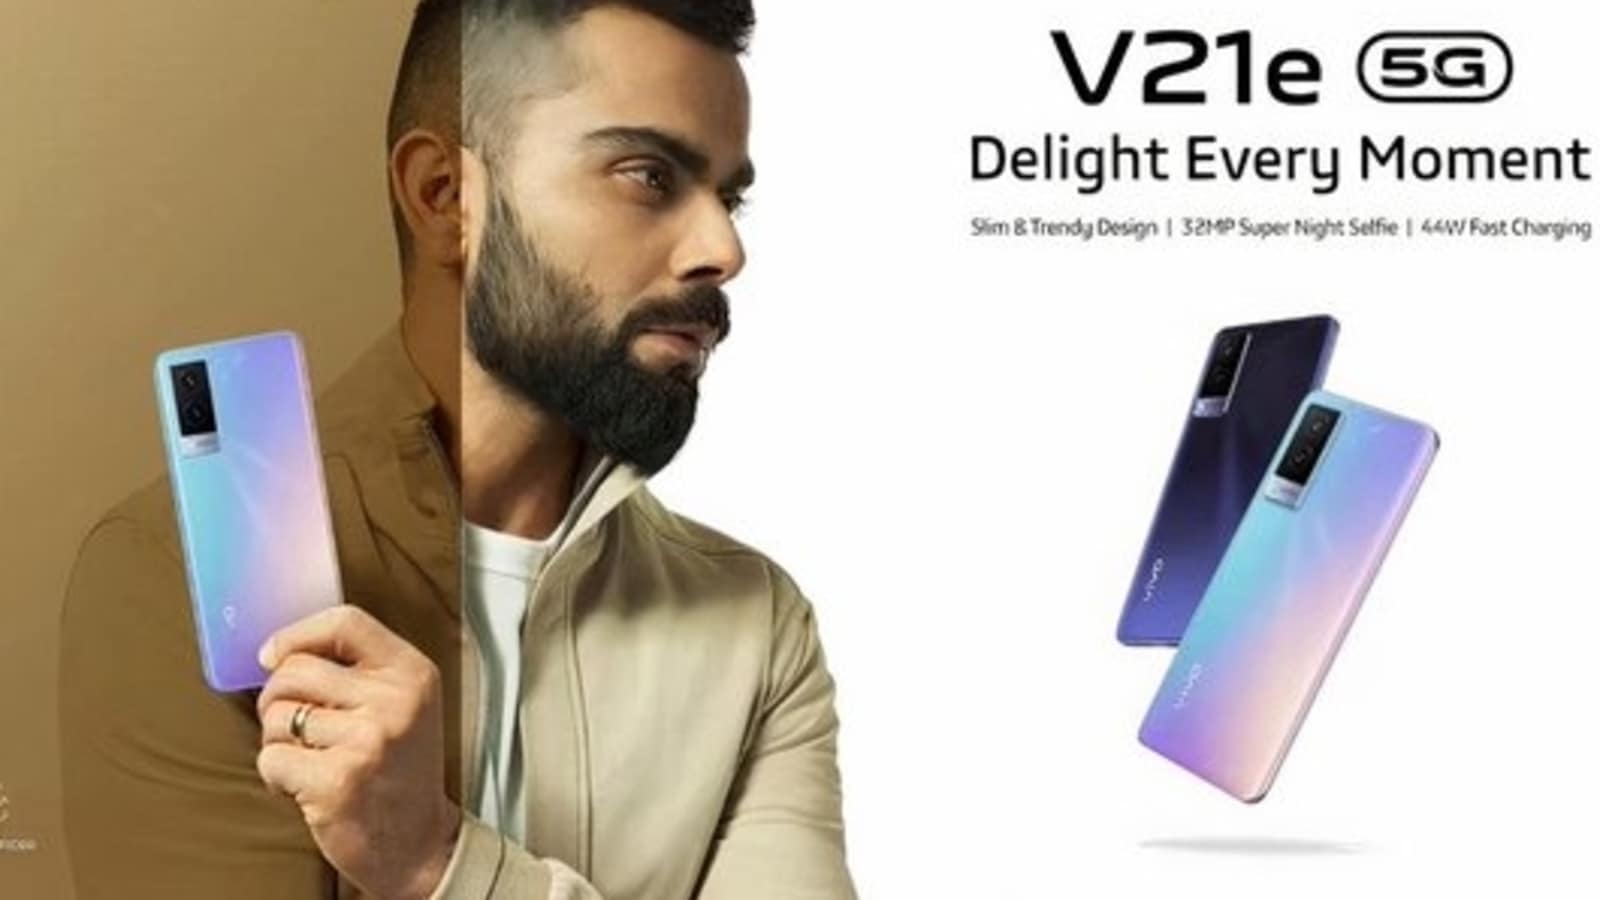 Vivo V21e poster with Virat Kohli on it leaked online! Just take a look